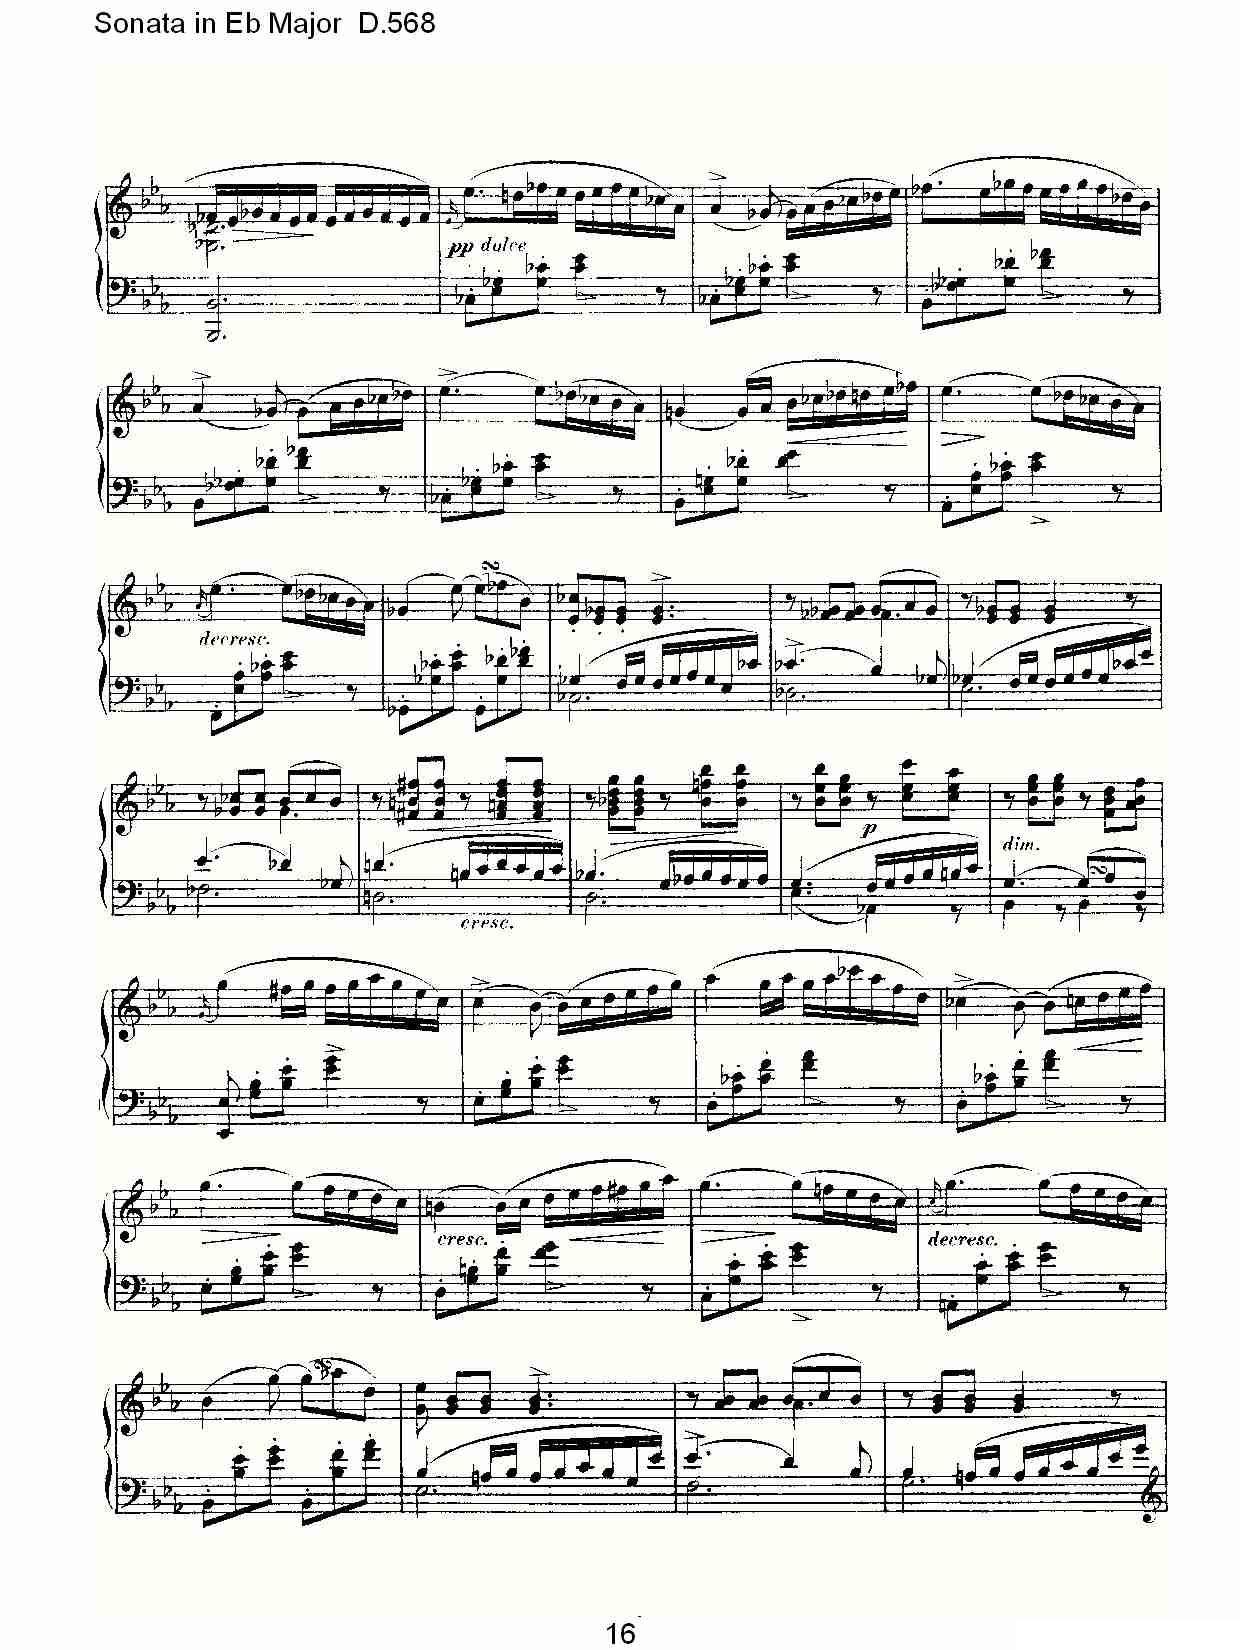 Sonata in Eb Major D.568（Eb大调奏鸣曲 D.568）钢琴曲谱（图16）